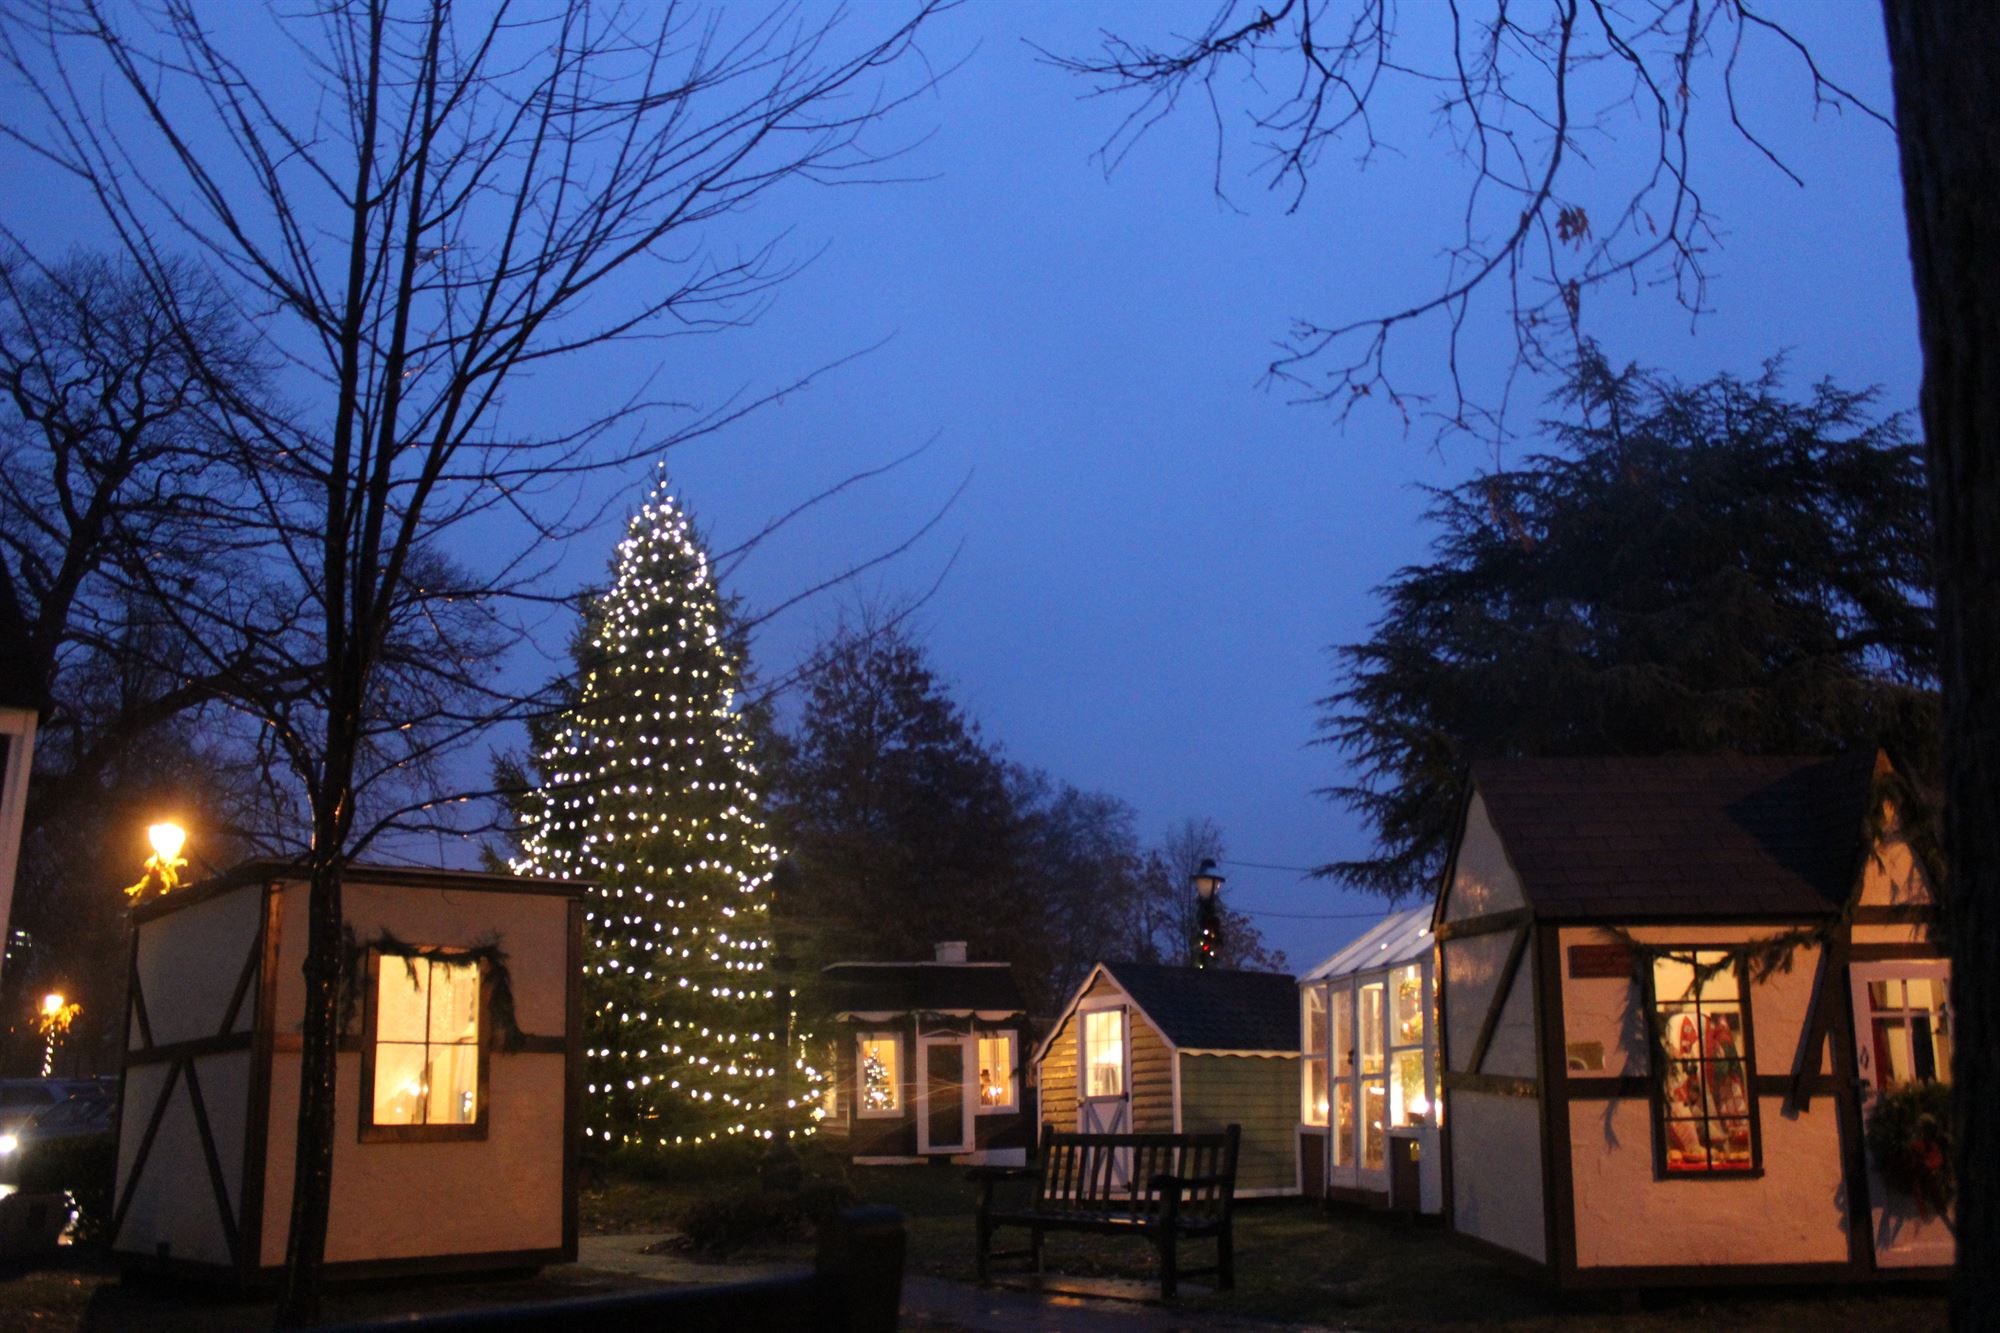 Maplewood's Dickens Village to Open with Santa, Tree Lighting Dec. 3